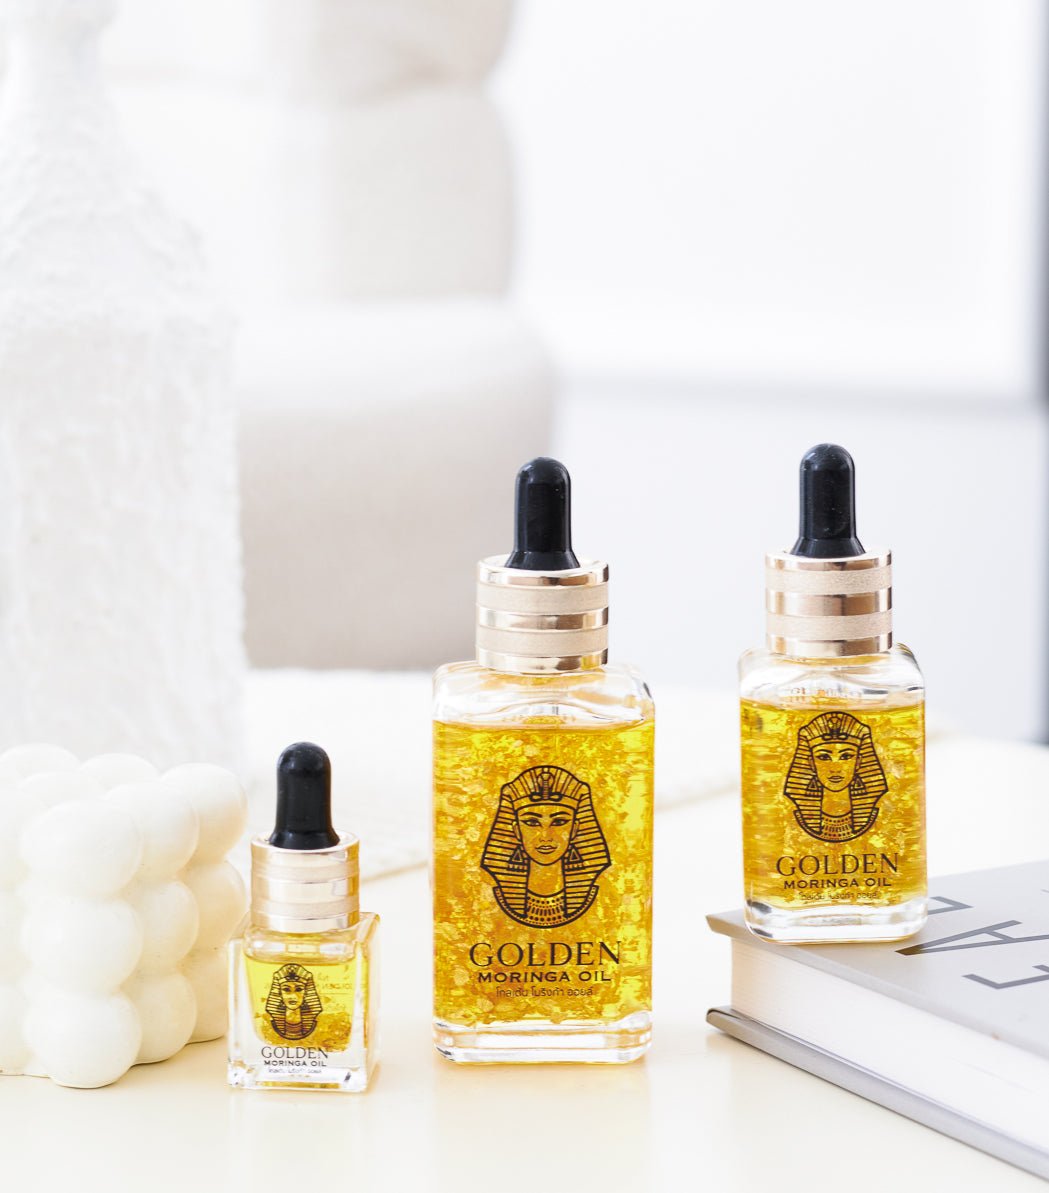 Panya Natural Golden Moringa Oil: Luxurious, rejuvenating organic Thai moringa oil skincare with real 24k gold